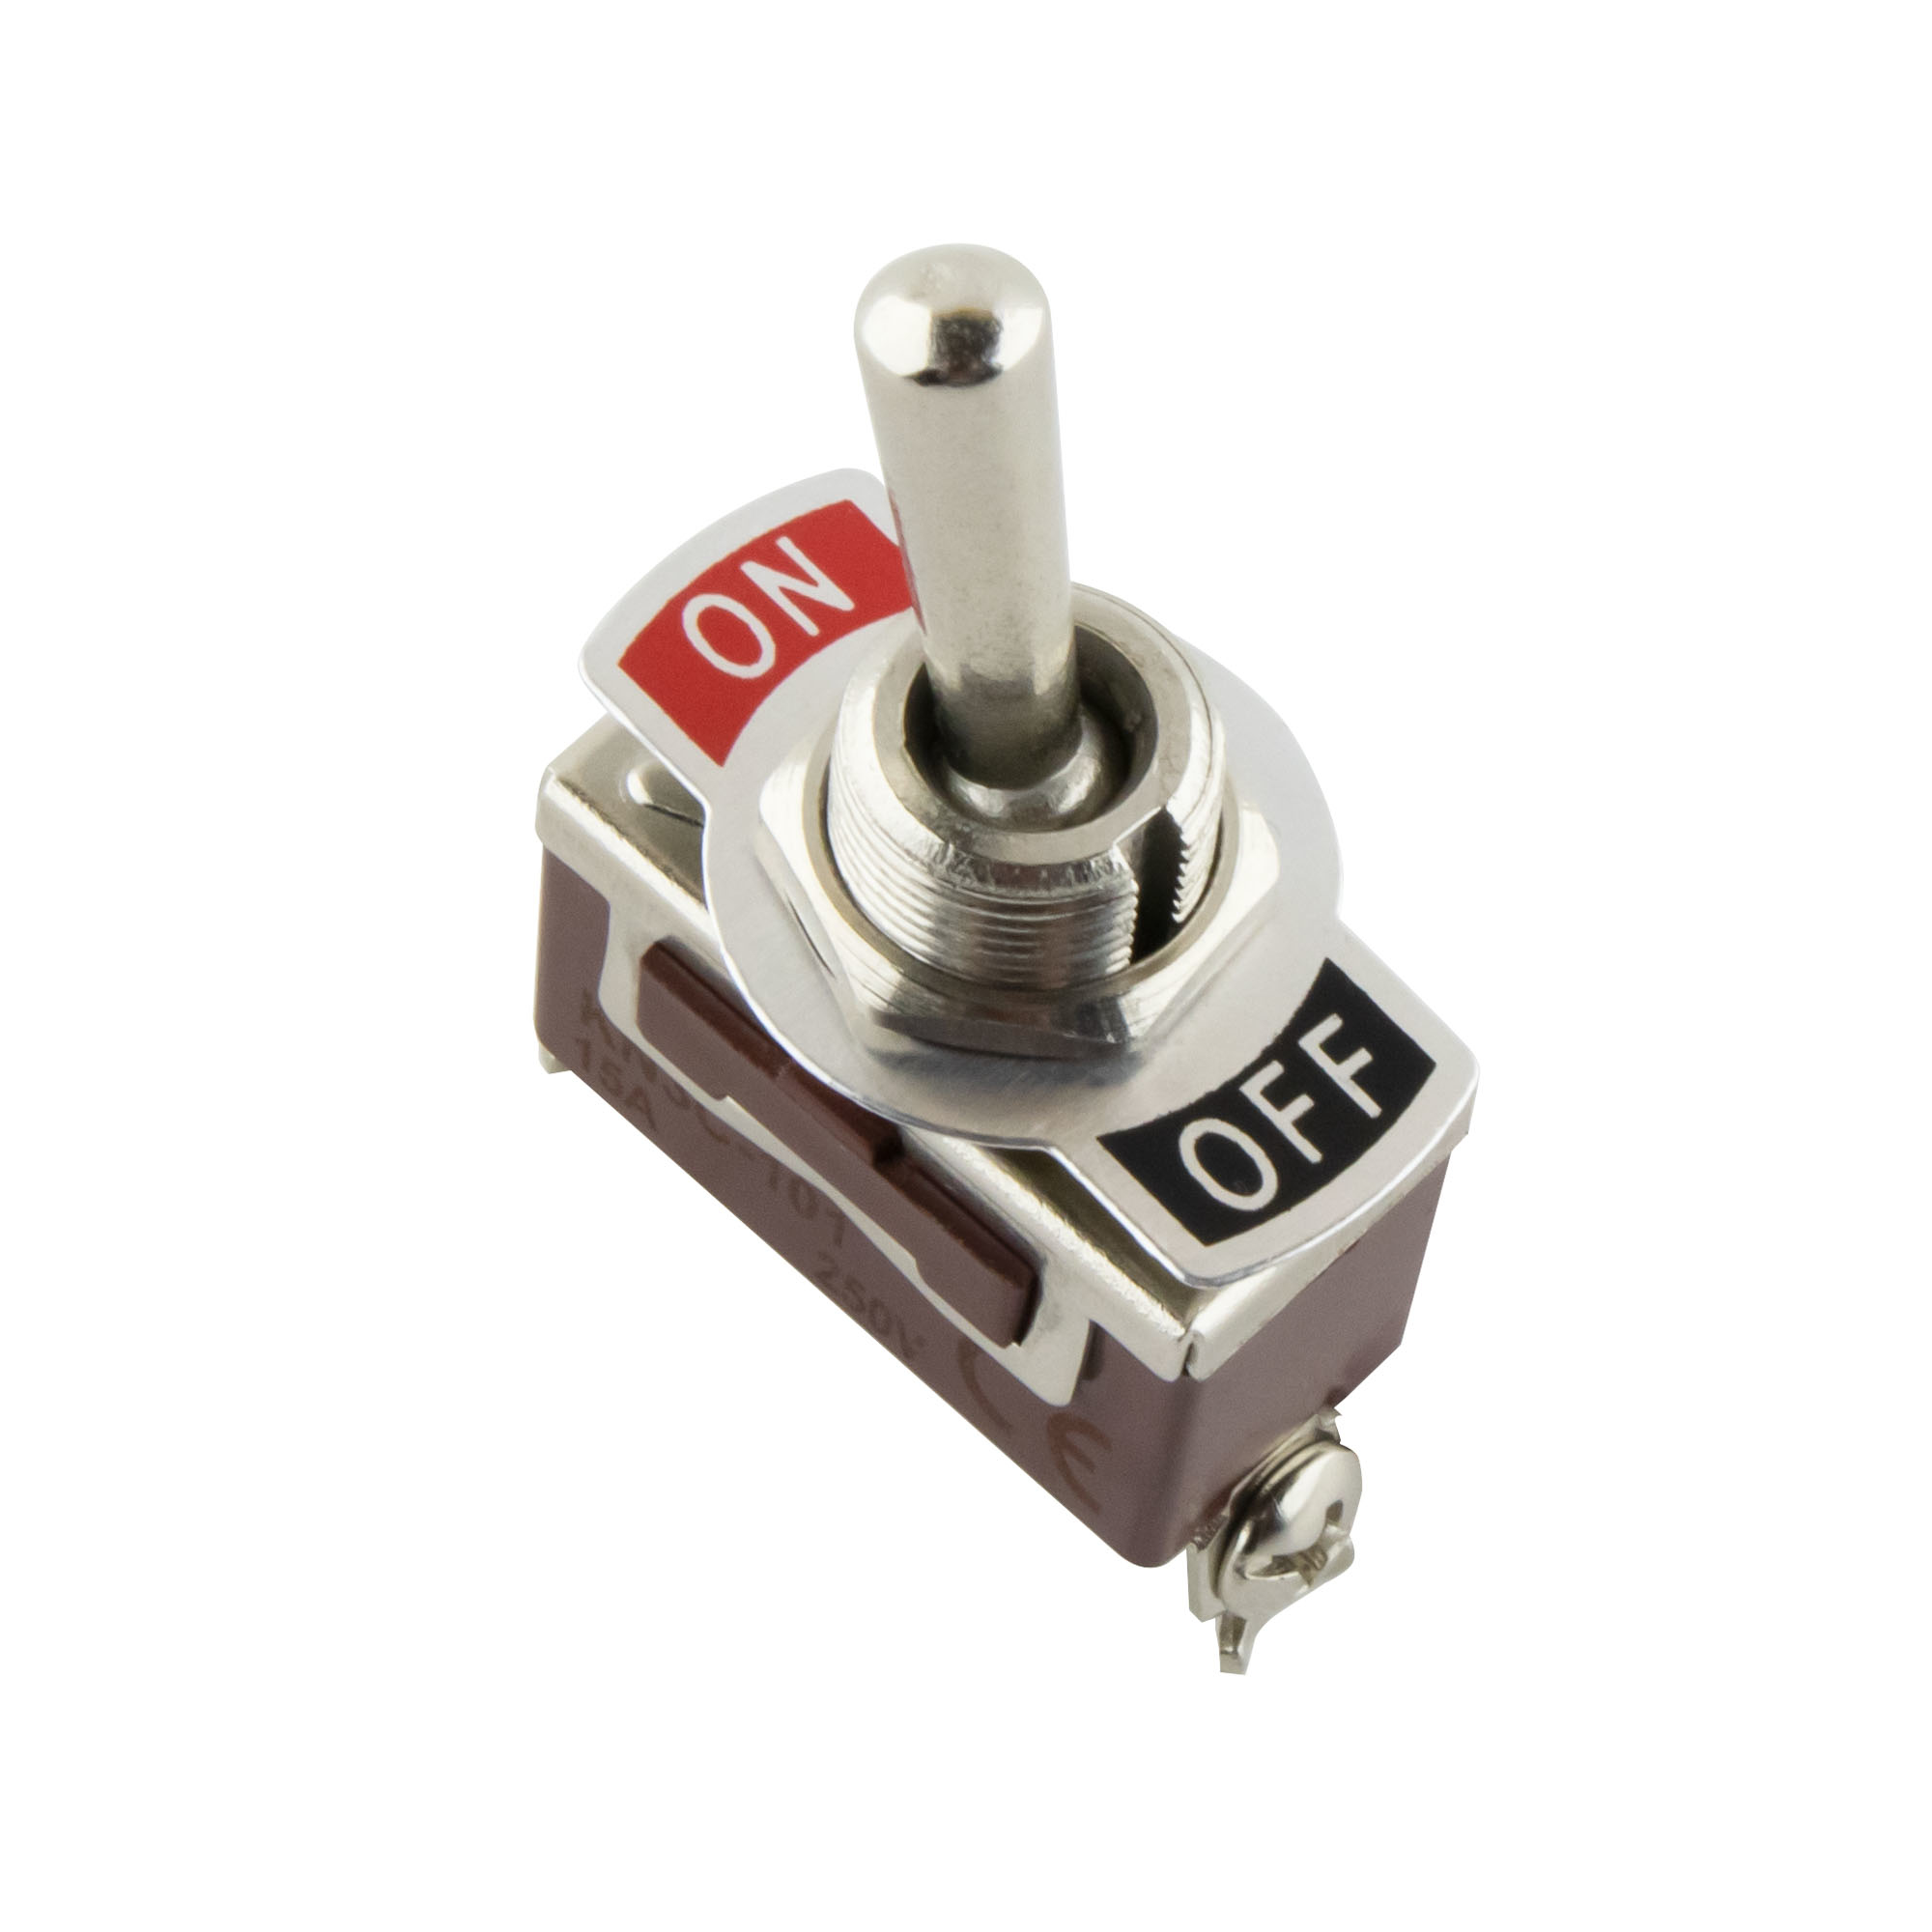 Toggle switch 1-pin 230V 15A